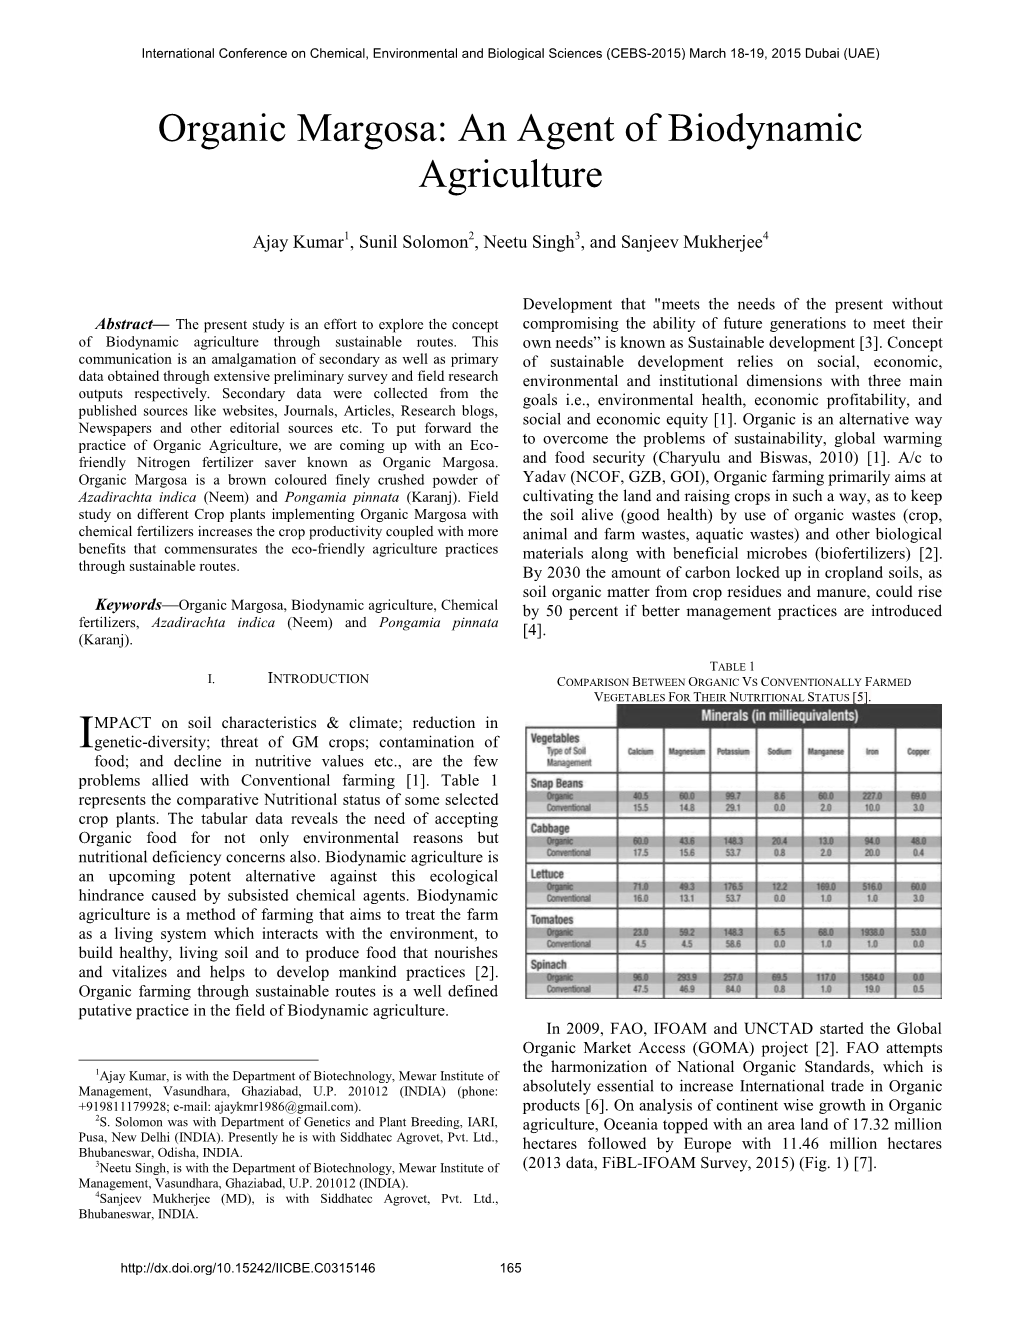 Organic Margosa: an Agent of Biodynamic Agriculture